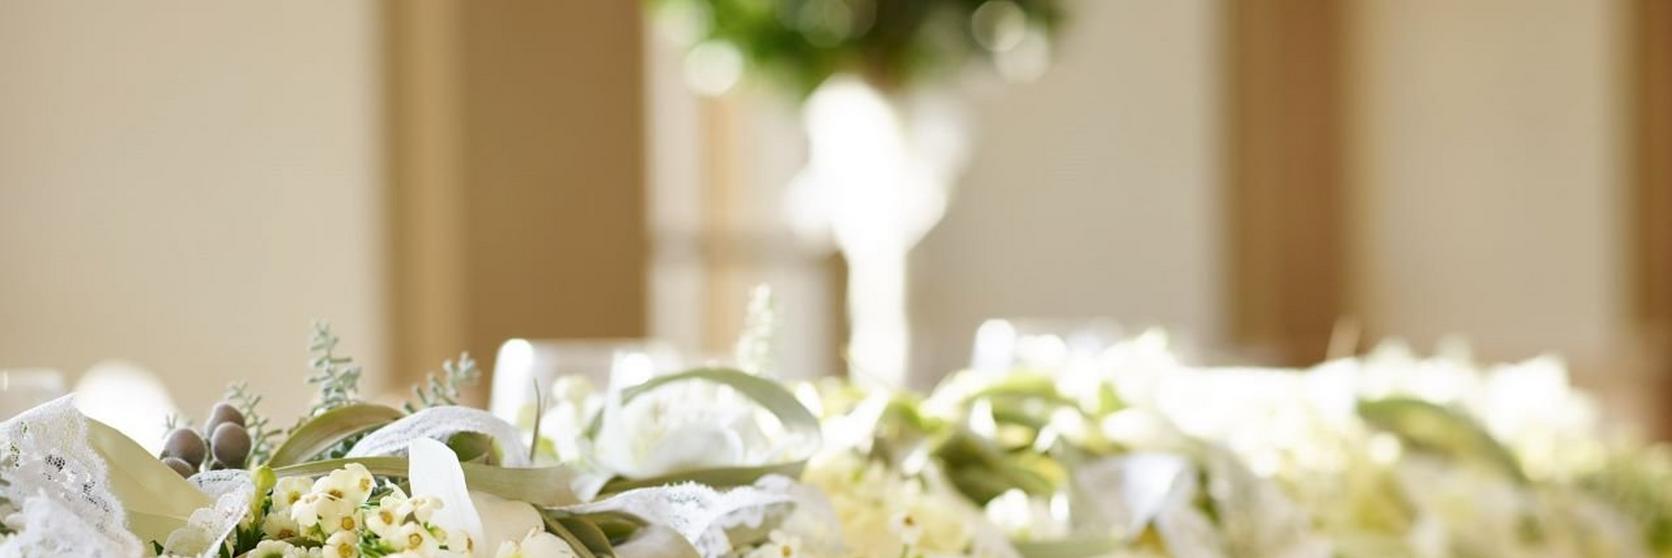 wedding-table-arrangement-white